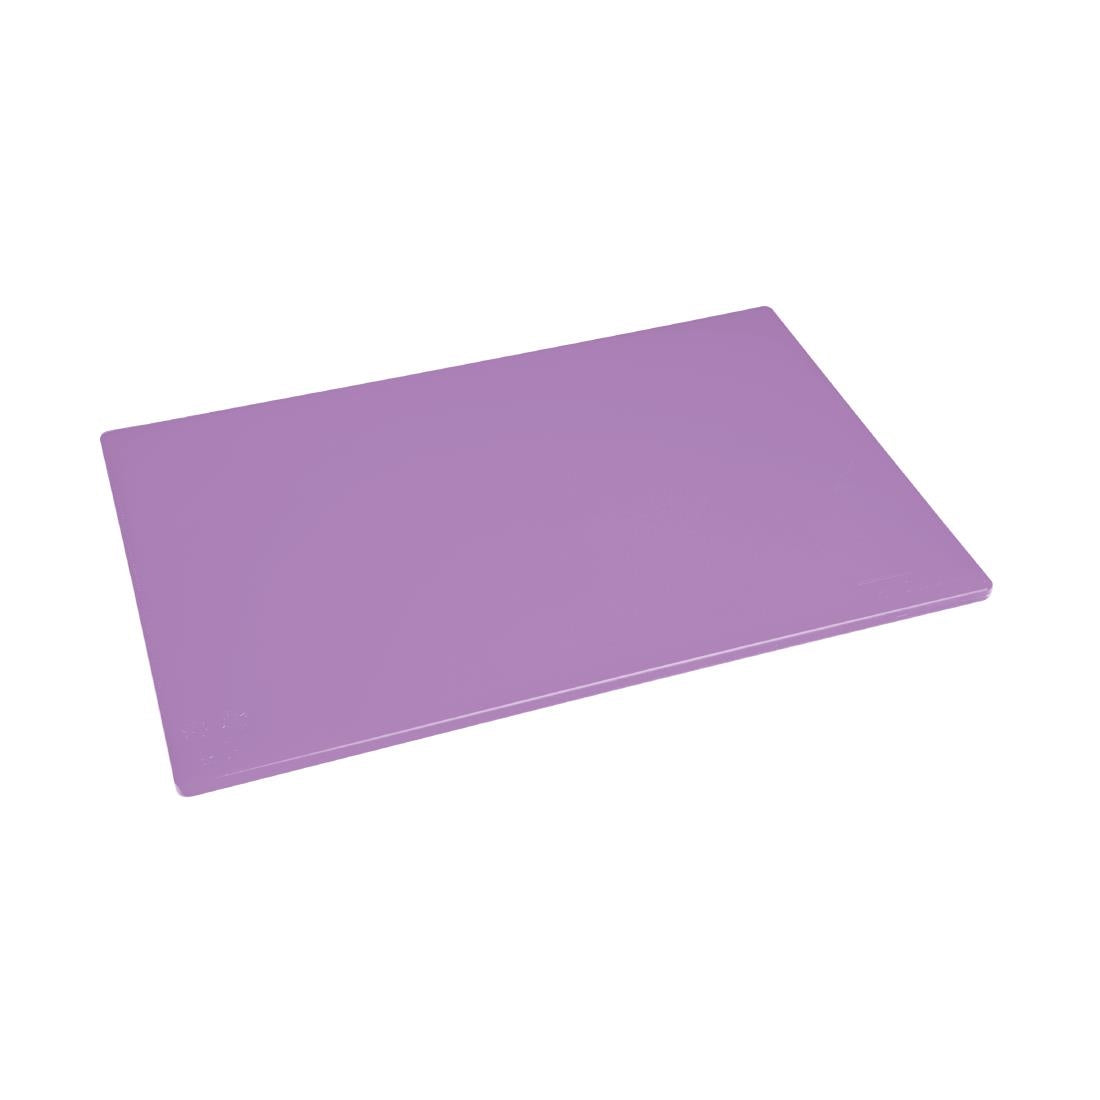 FX110 Hygiplas Anti-bacterial Low Density Chopping Board Purple - 450x300x10mm JD Catering Equipment Solutions Ltd